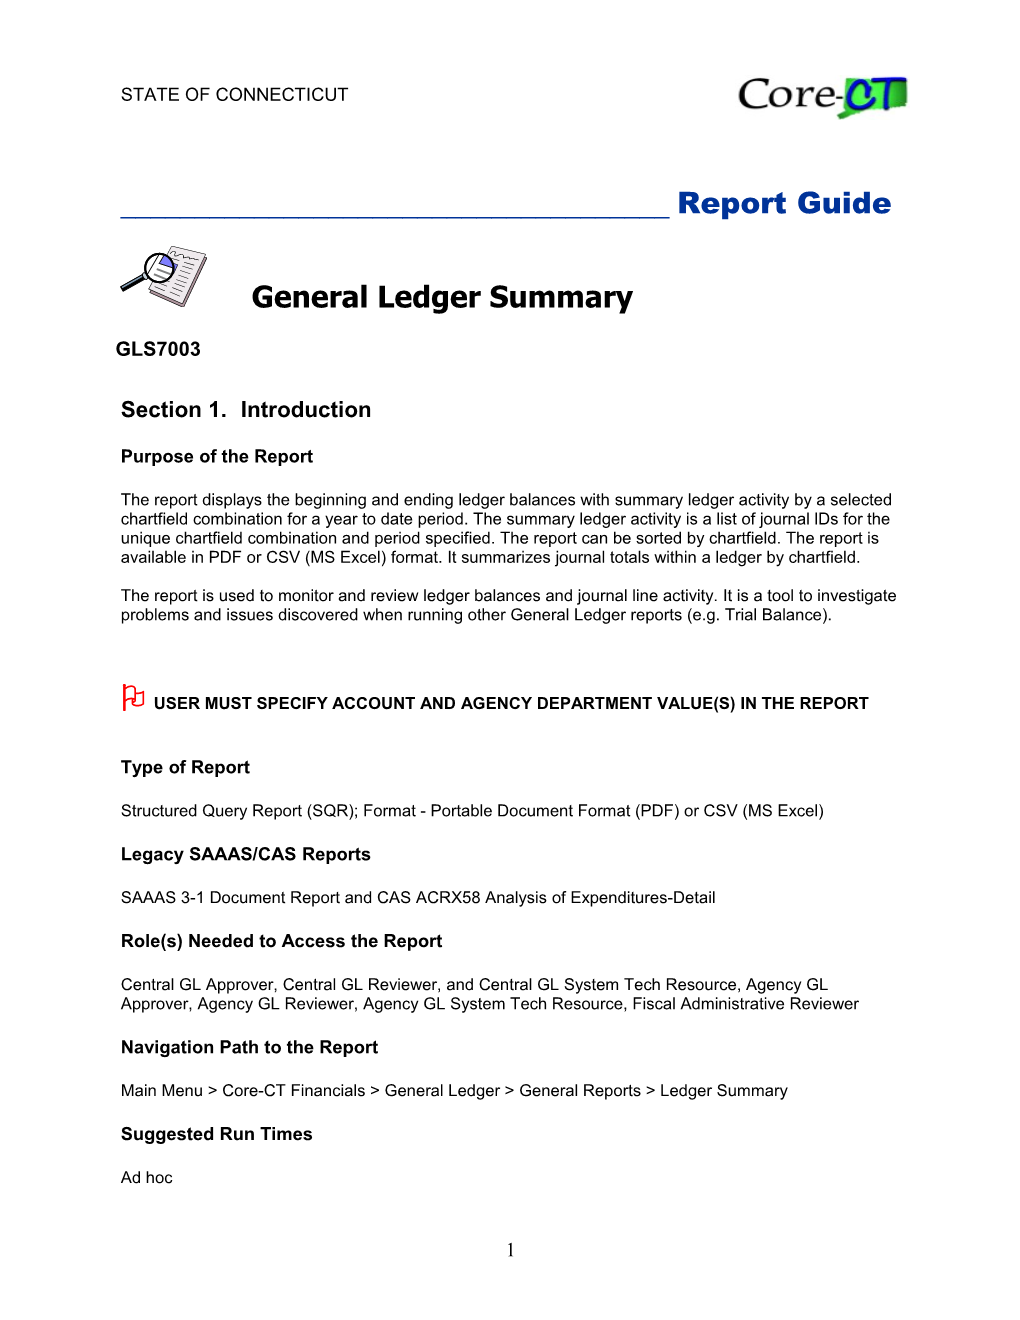 General Ledger Summary (GLS7003)